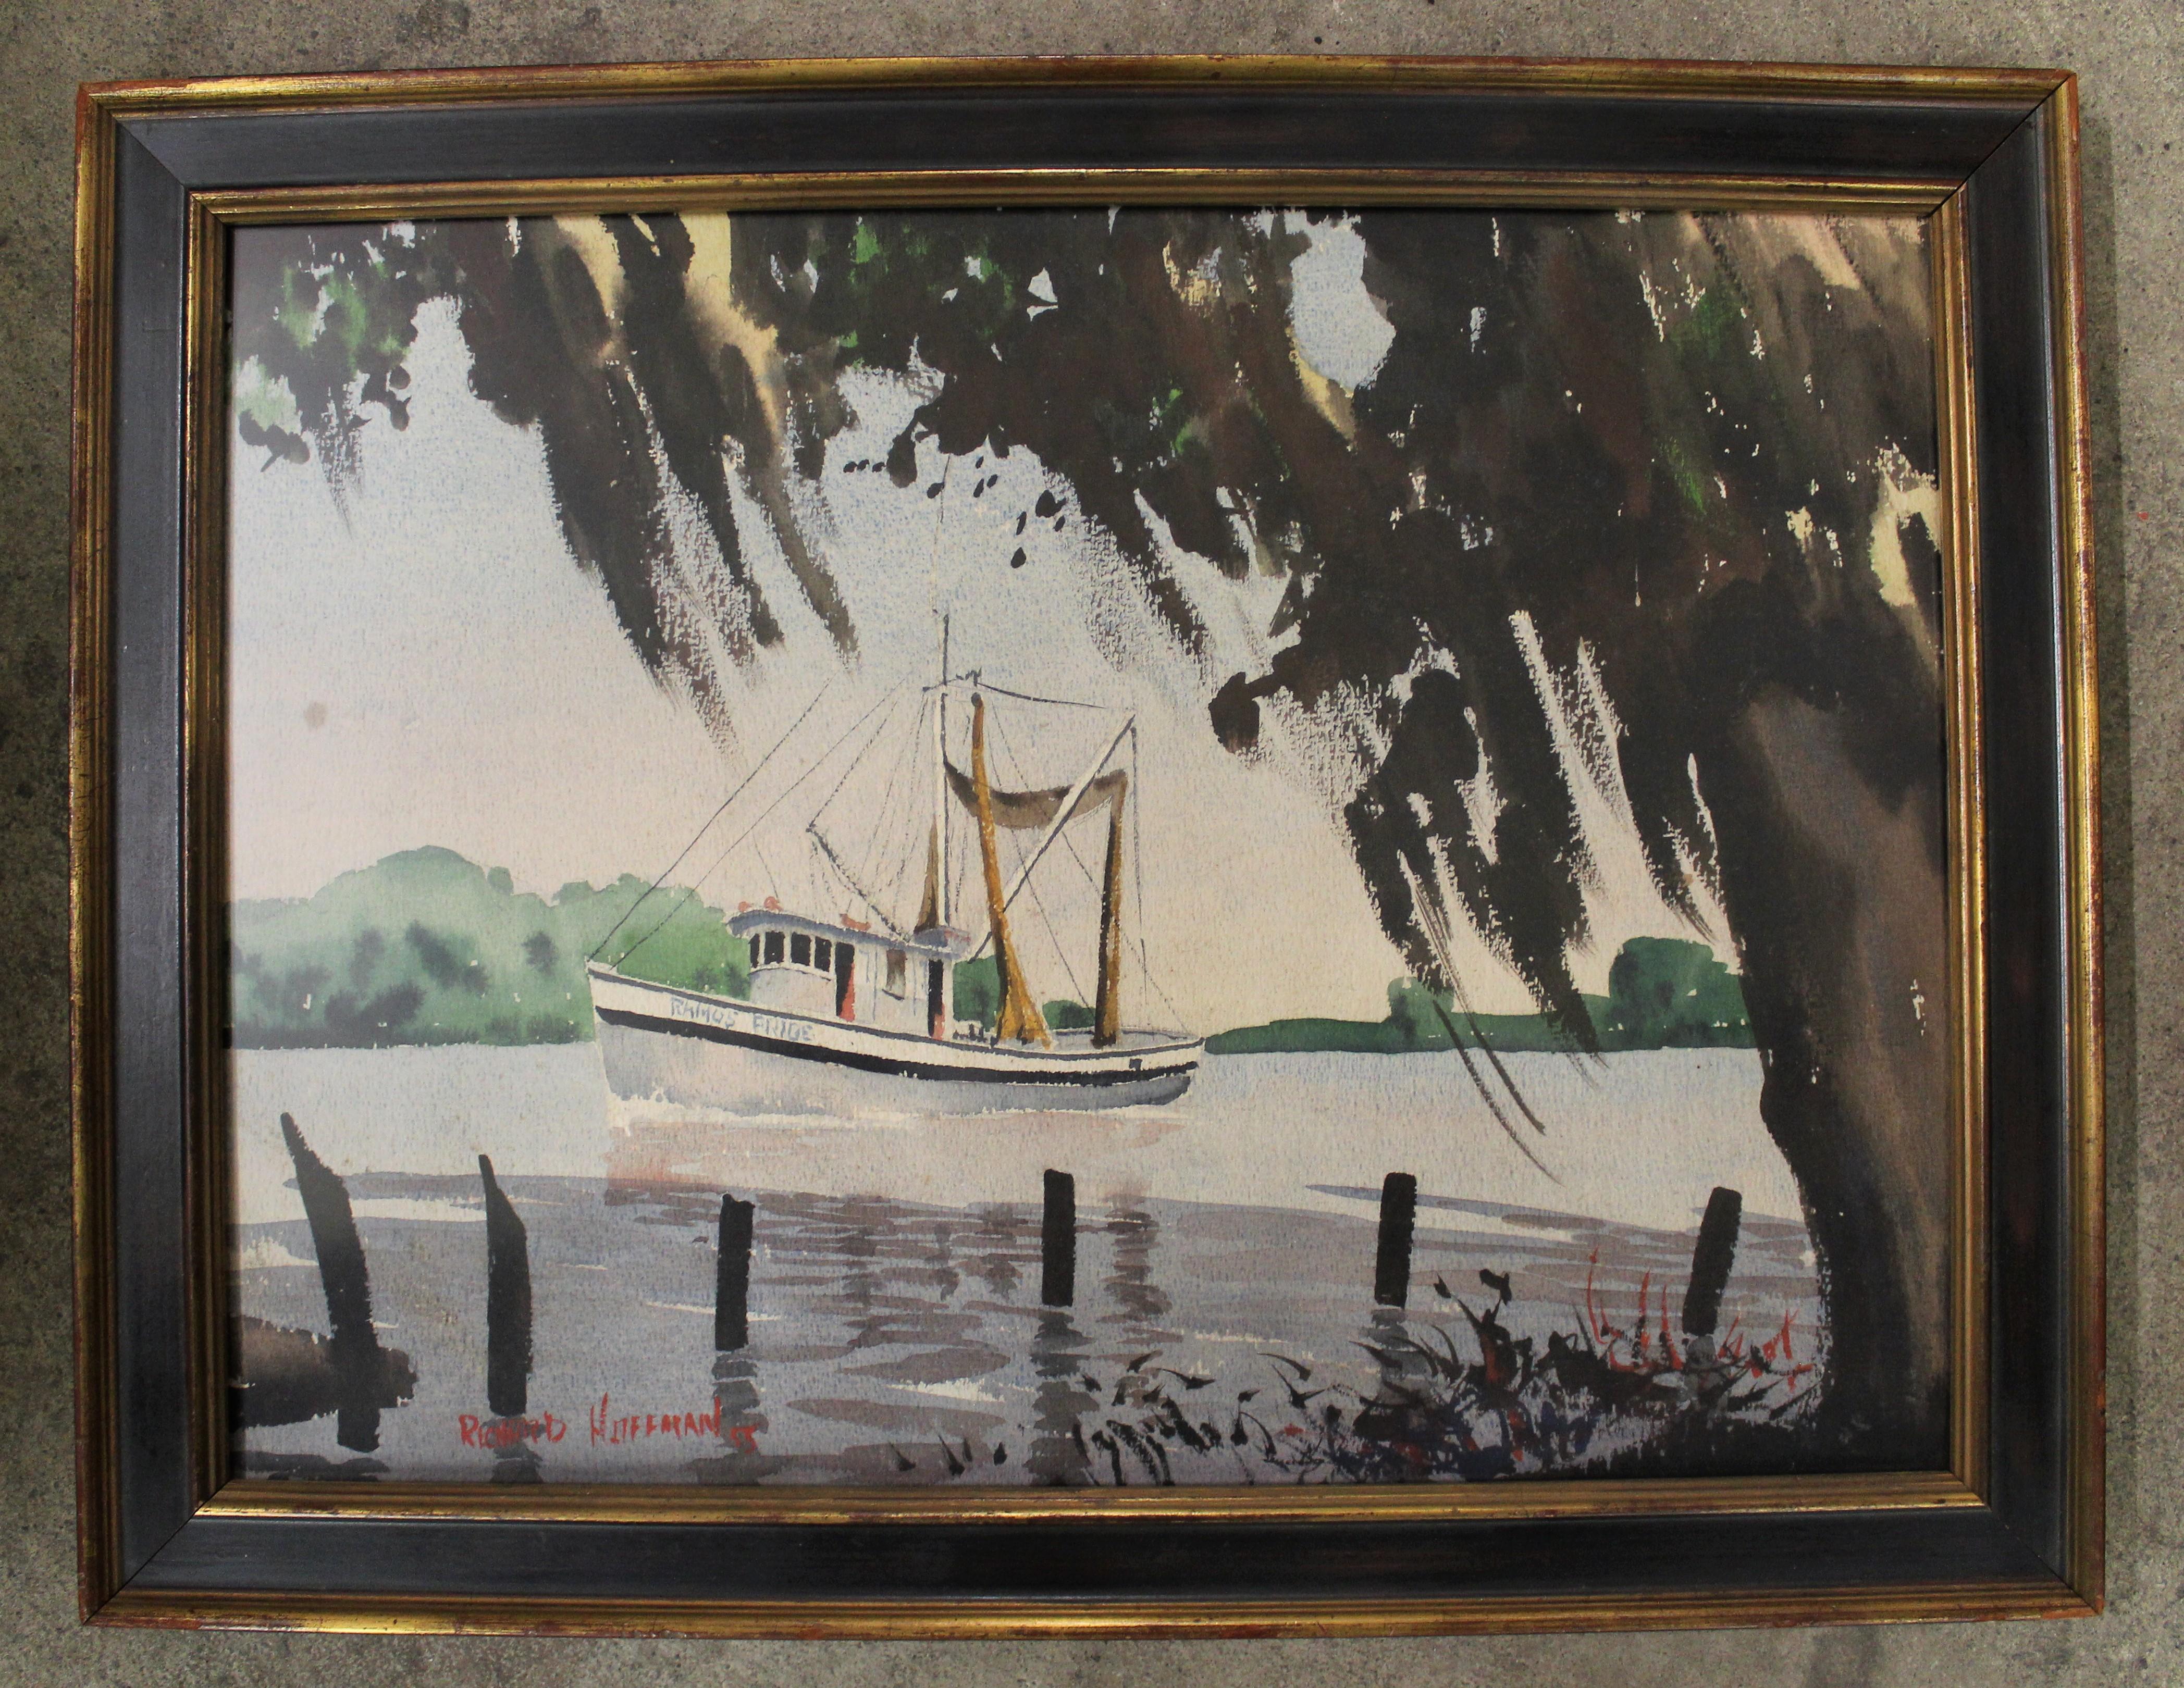 Richard Peter Hoffman (American 1911-1997) 
Medium: Watercolor
Shrimp boat in the Louisiana Bayou.

Biography:

Richard Peter Hoffman was a precisionist painter, photographer, and designer. Born in Allentown, Pennsylvania in 1911, Hoffman was